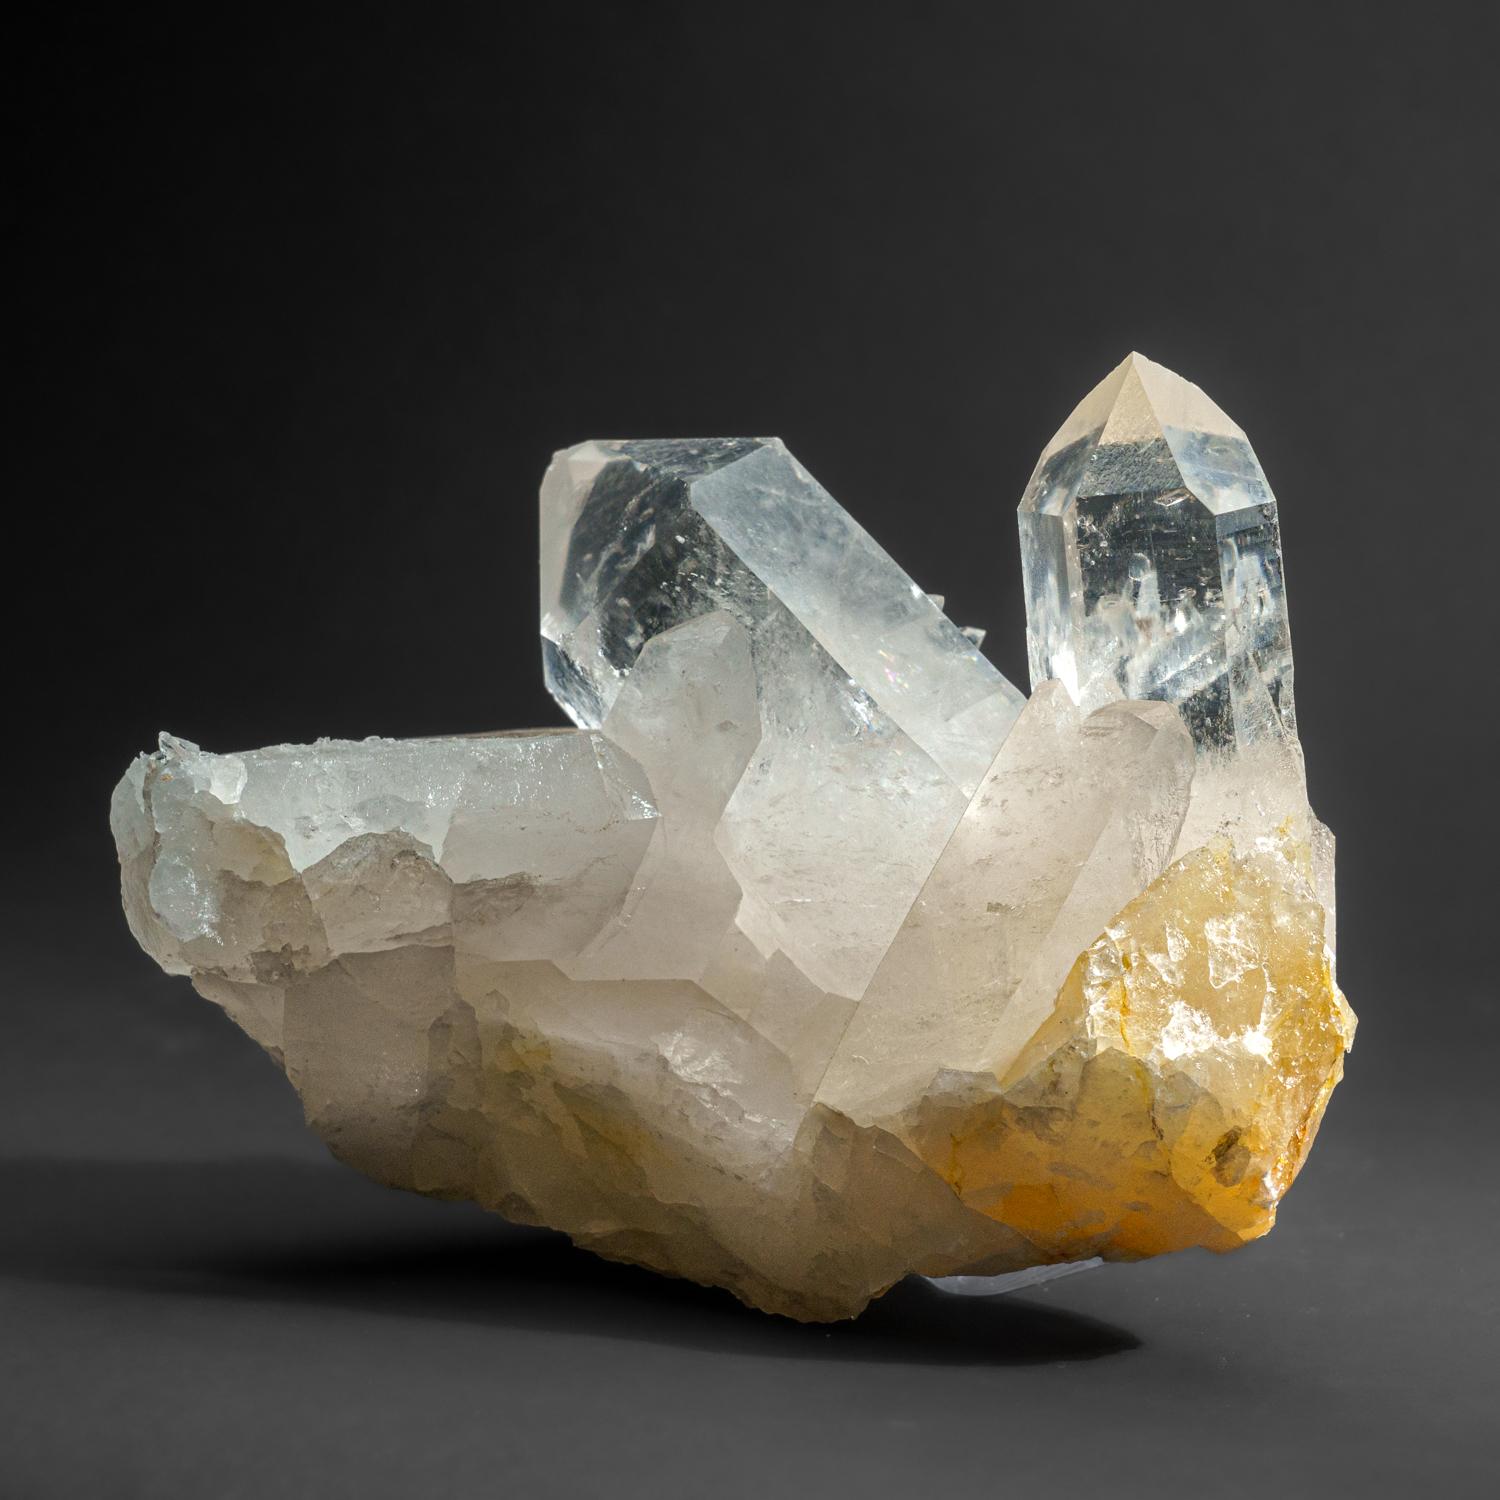 Contemporary Gem Quartz Crystal Cluster from Brazil (6.9 lbs)